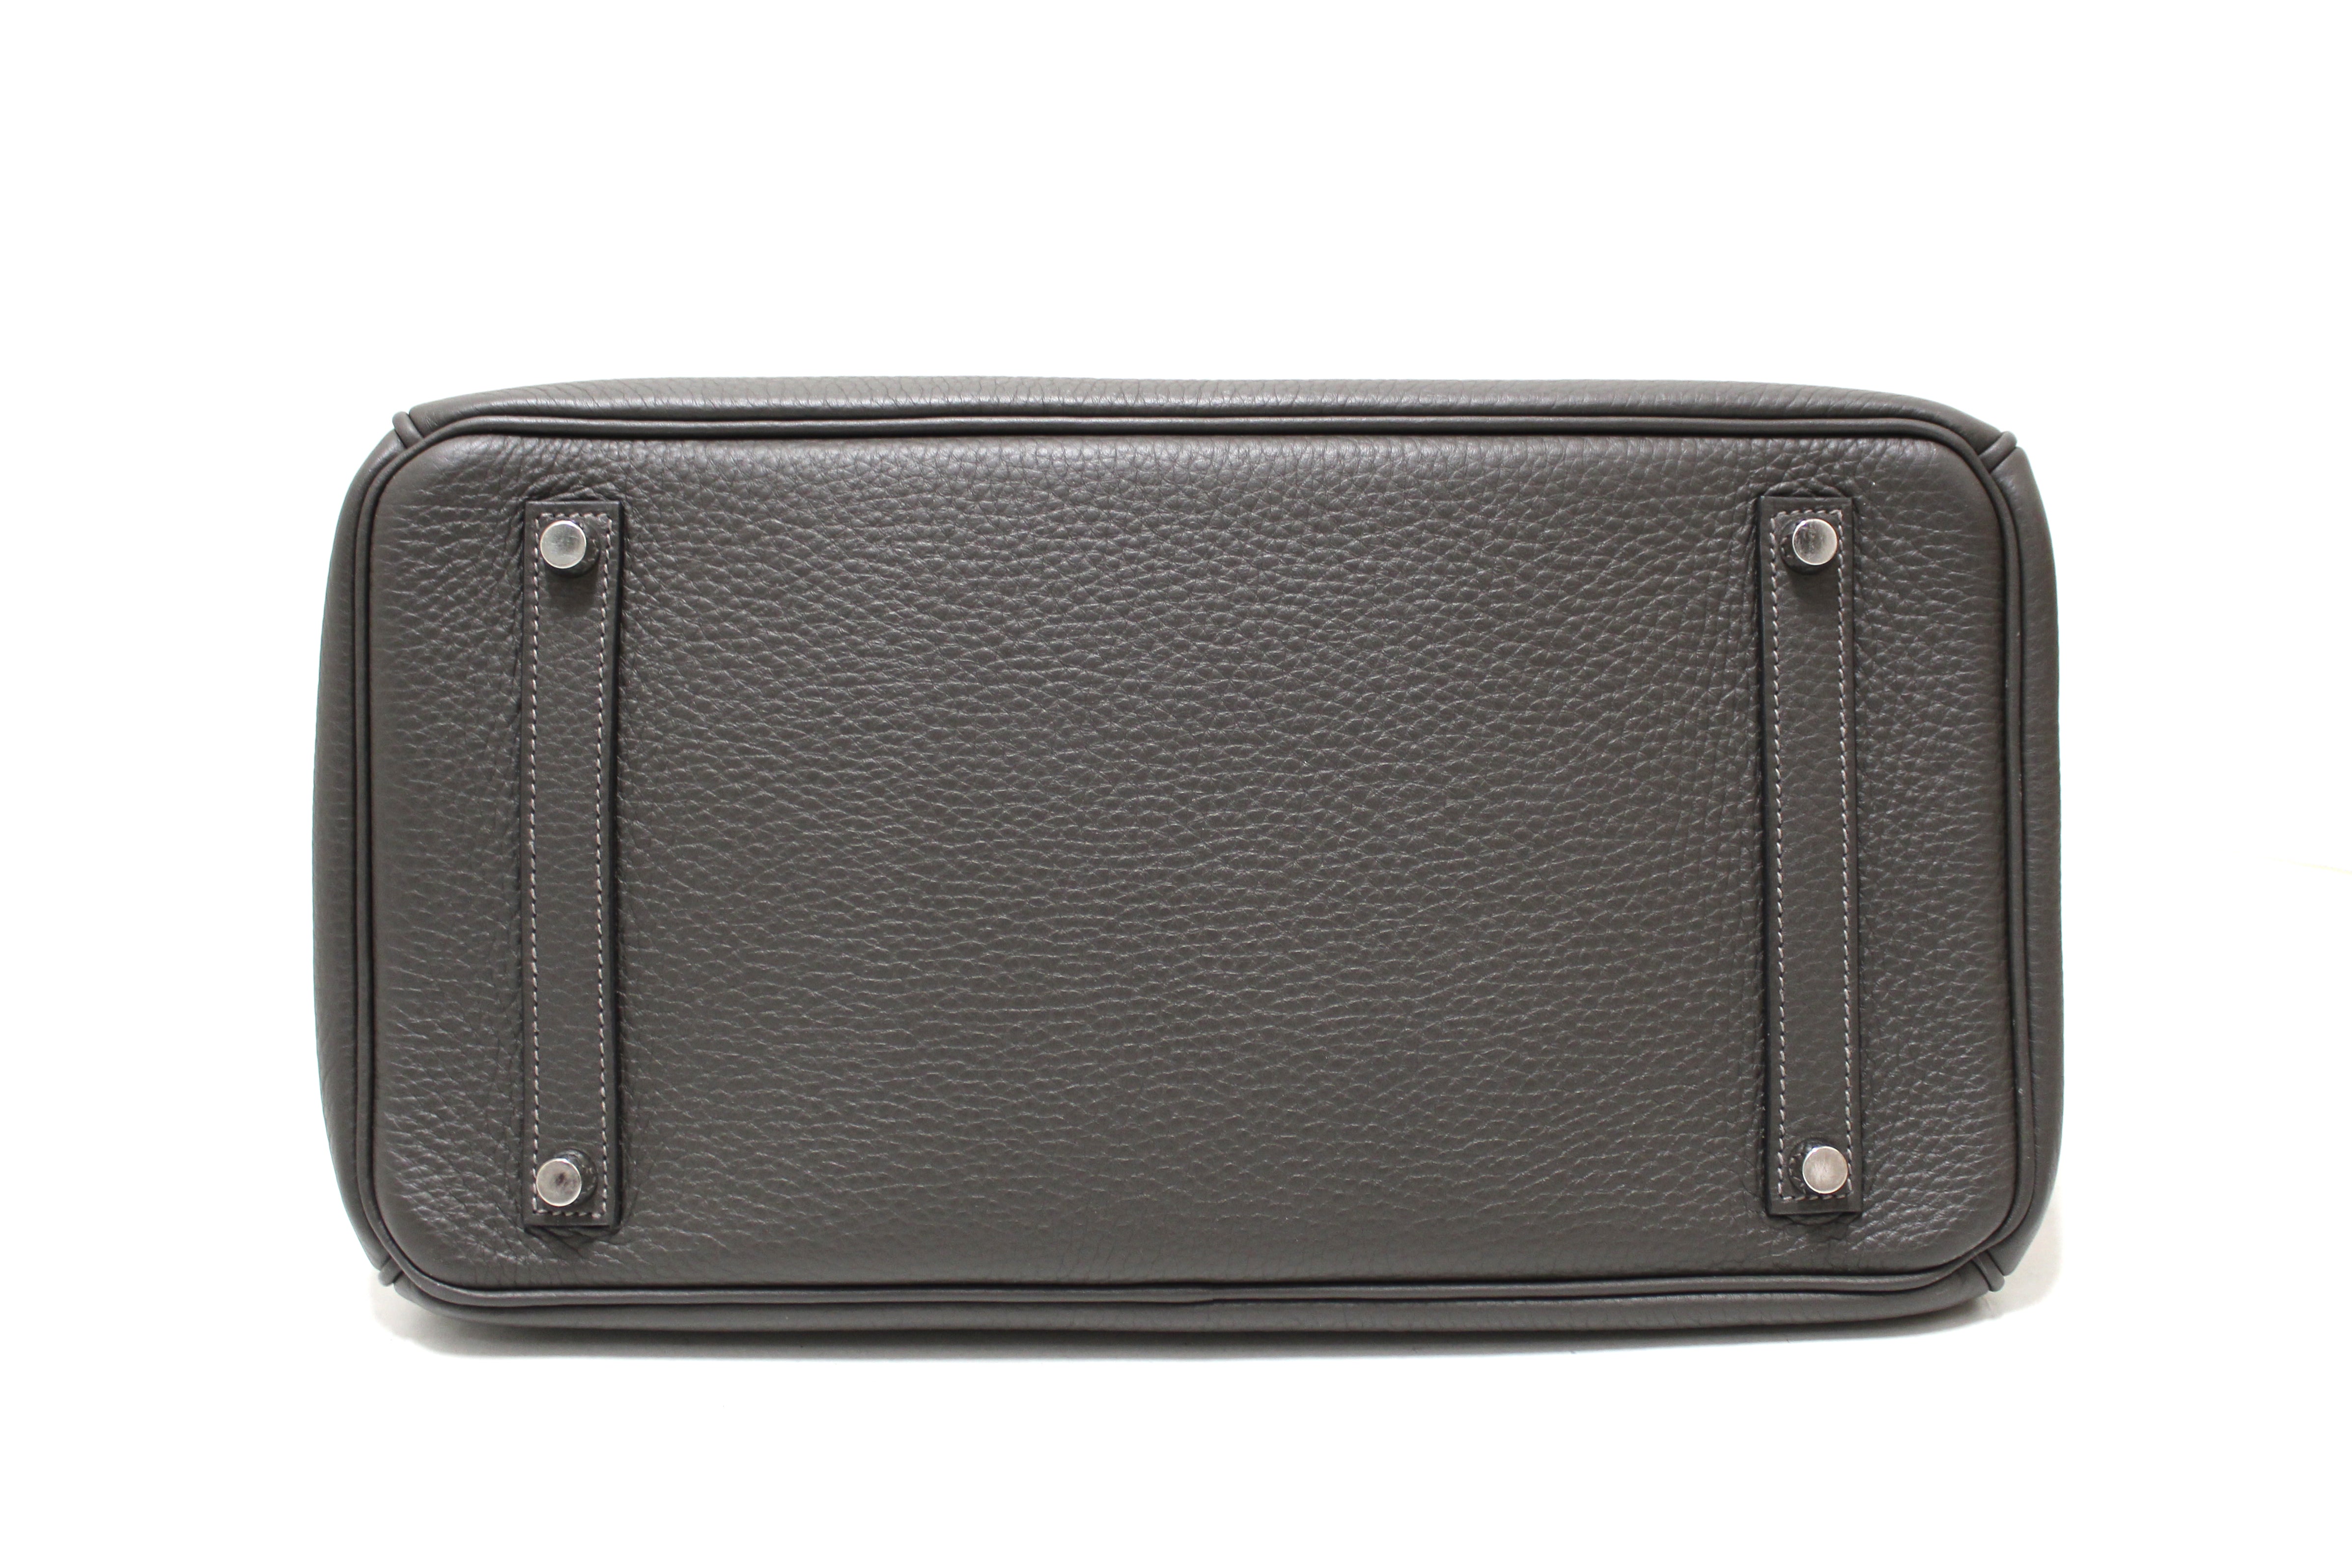 Authentic Hermes Grey Etain Togo Leather Birkin 35 Handbag